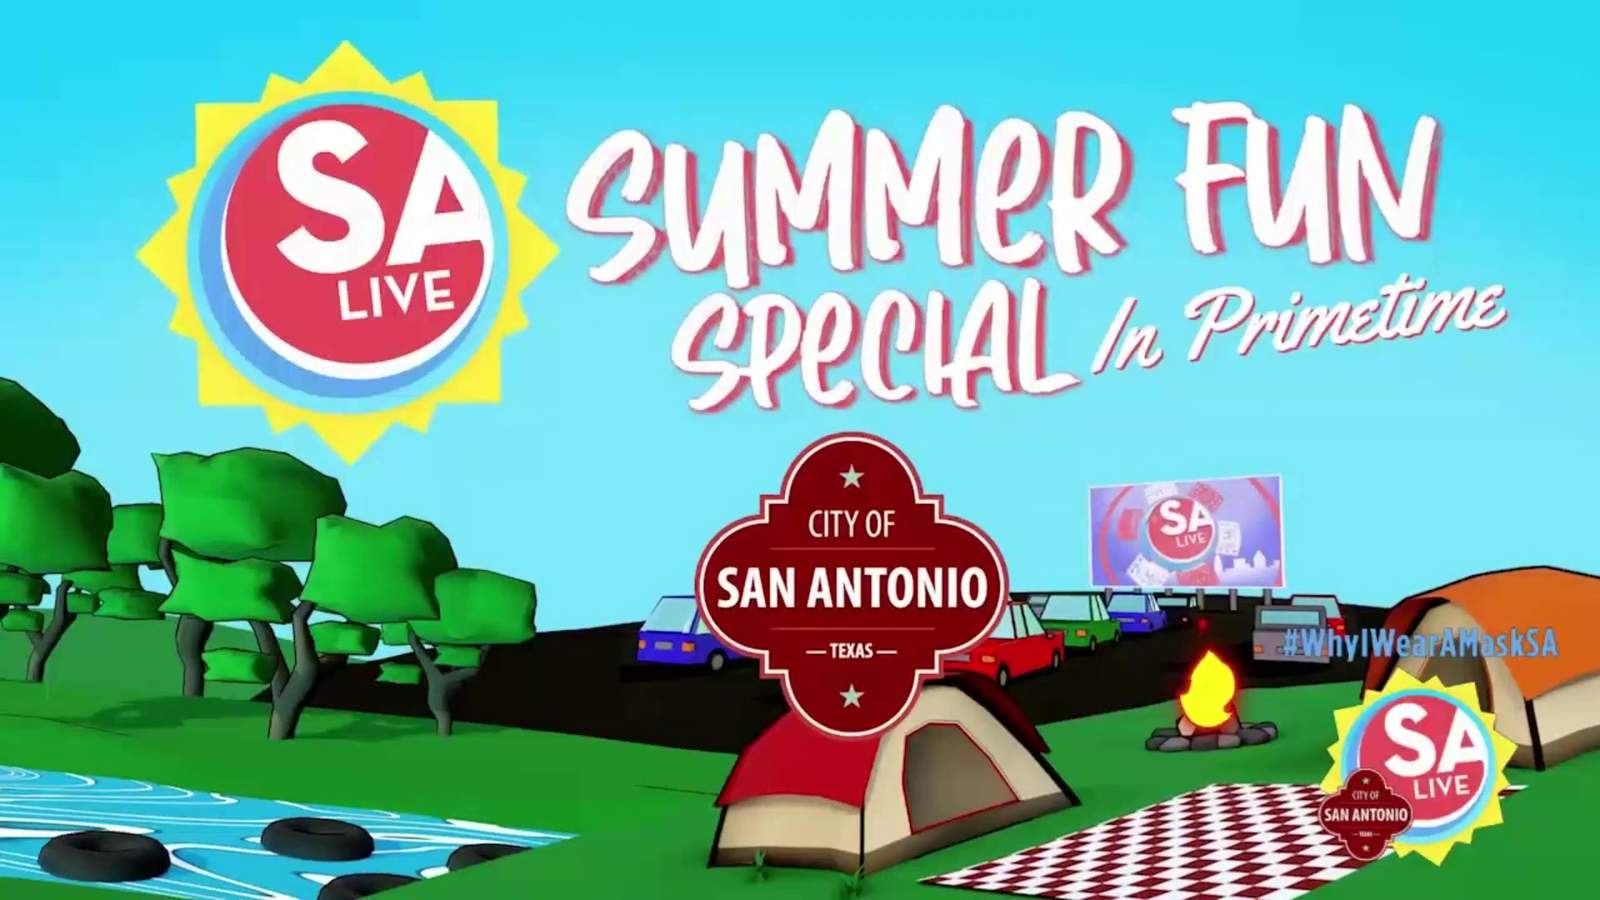 WATCH: SA Live Summer Fun Special in primetime - June 23, 2020